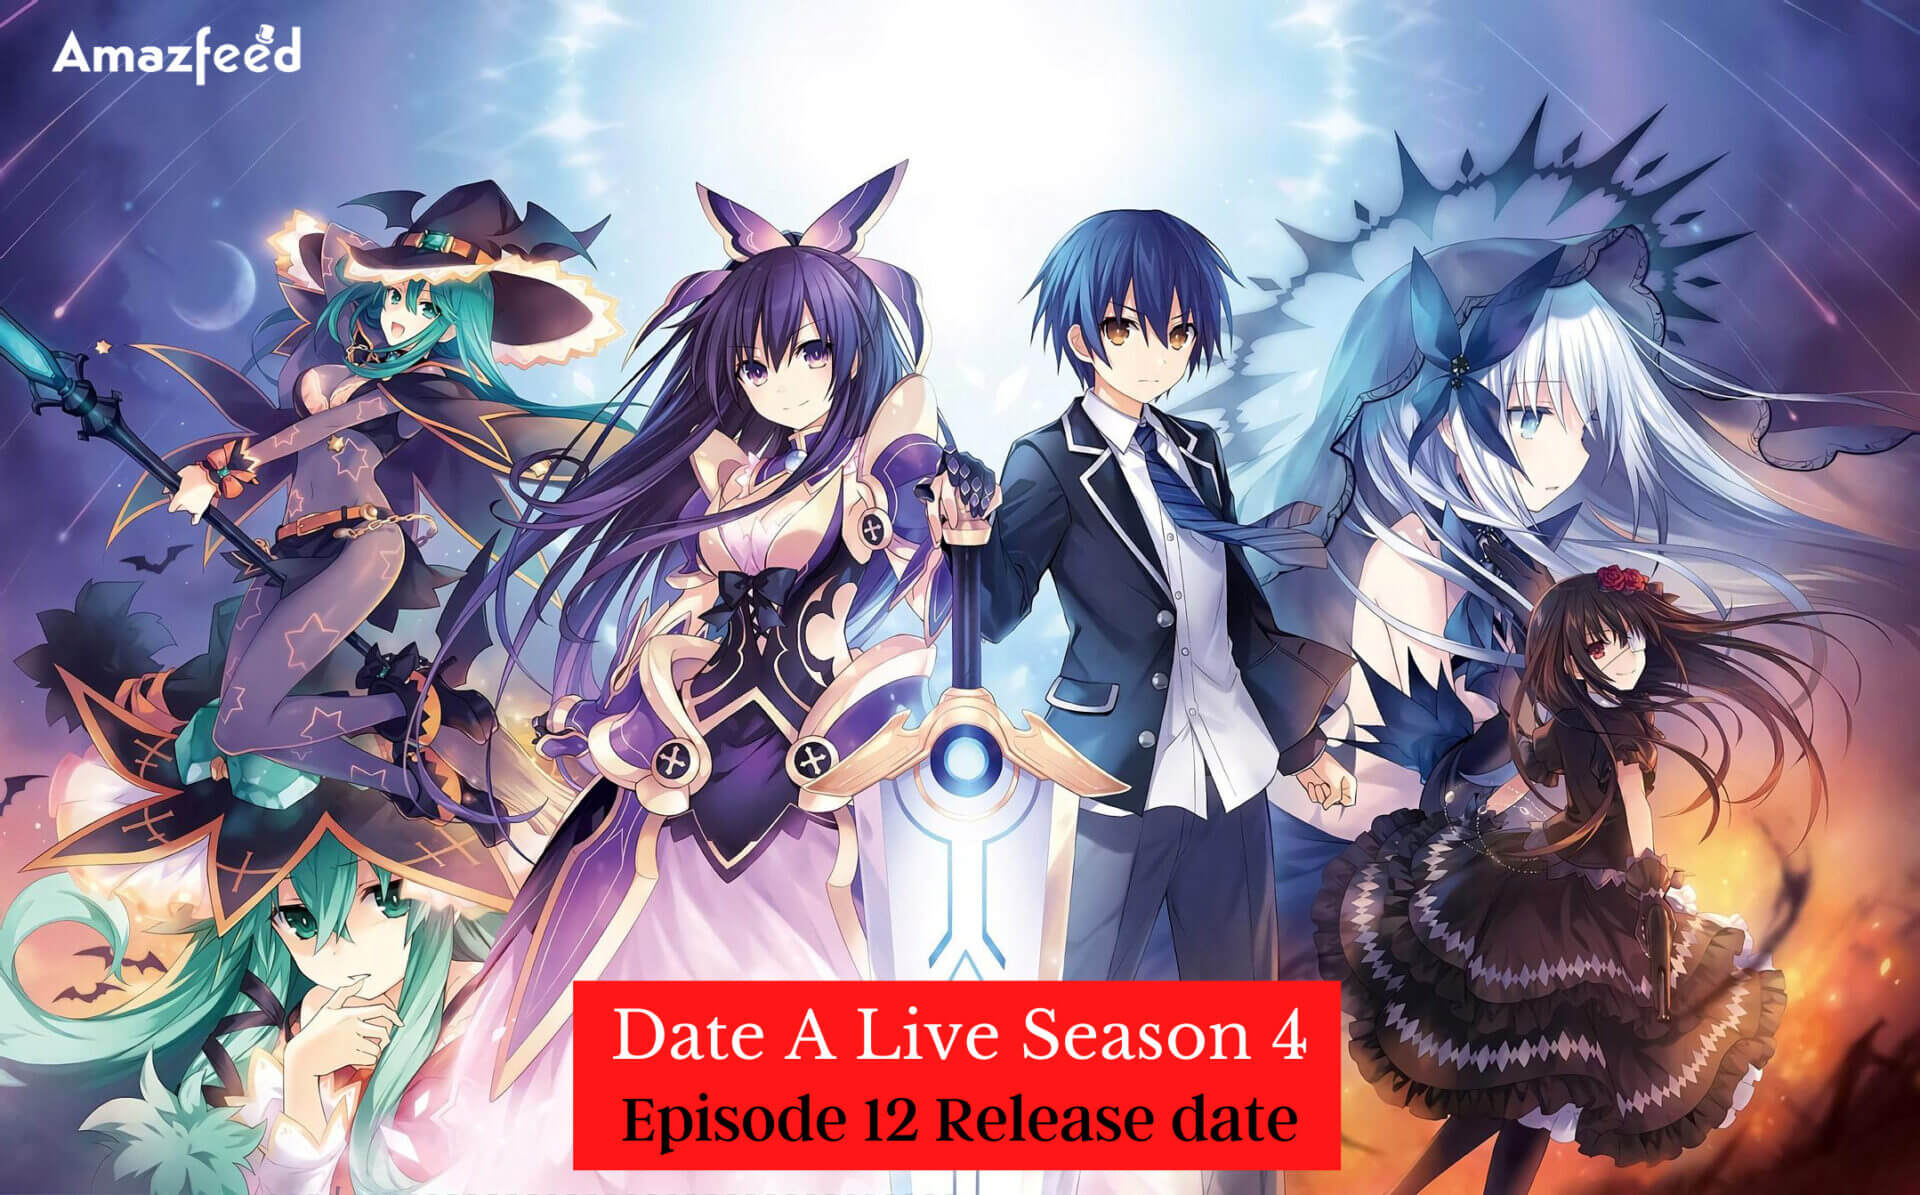 Date a Live season 4 episode 12 release countdown